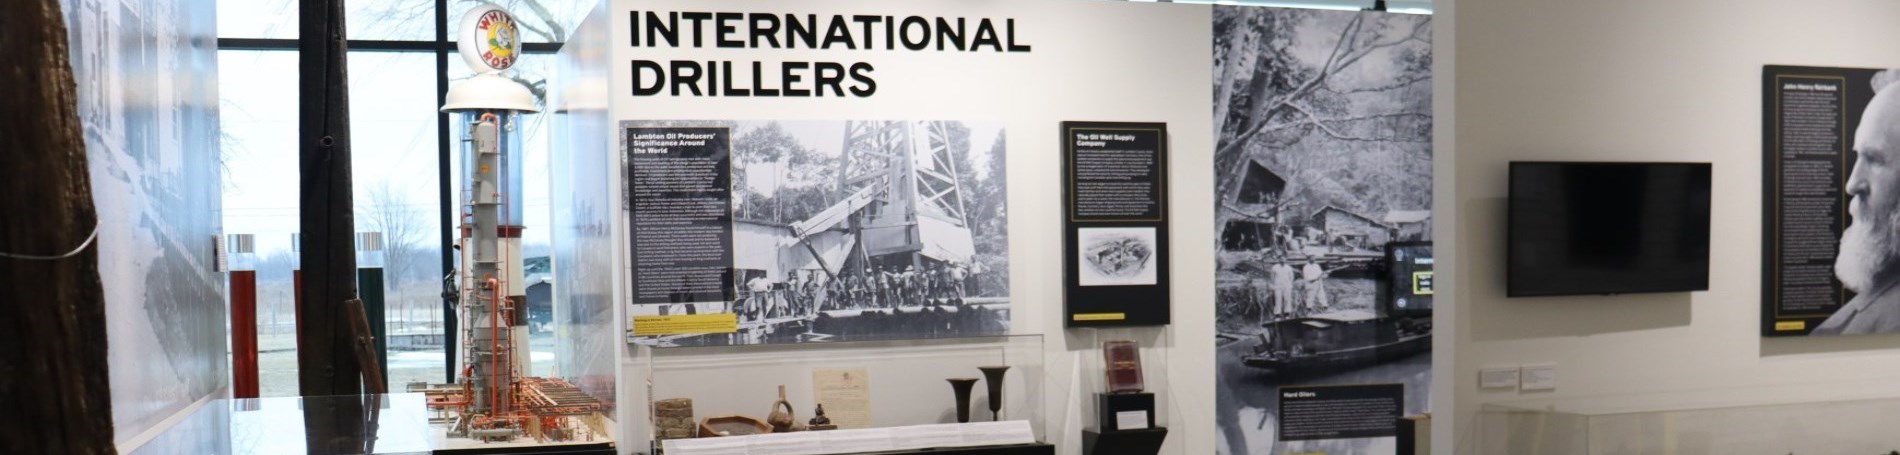 International Driller's display.